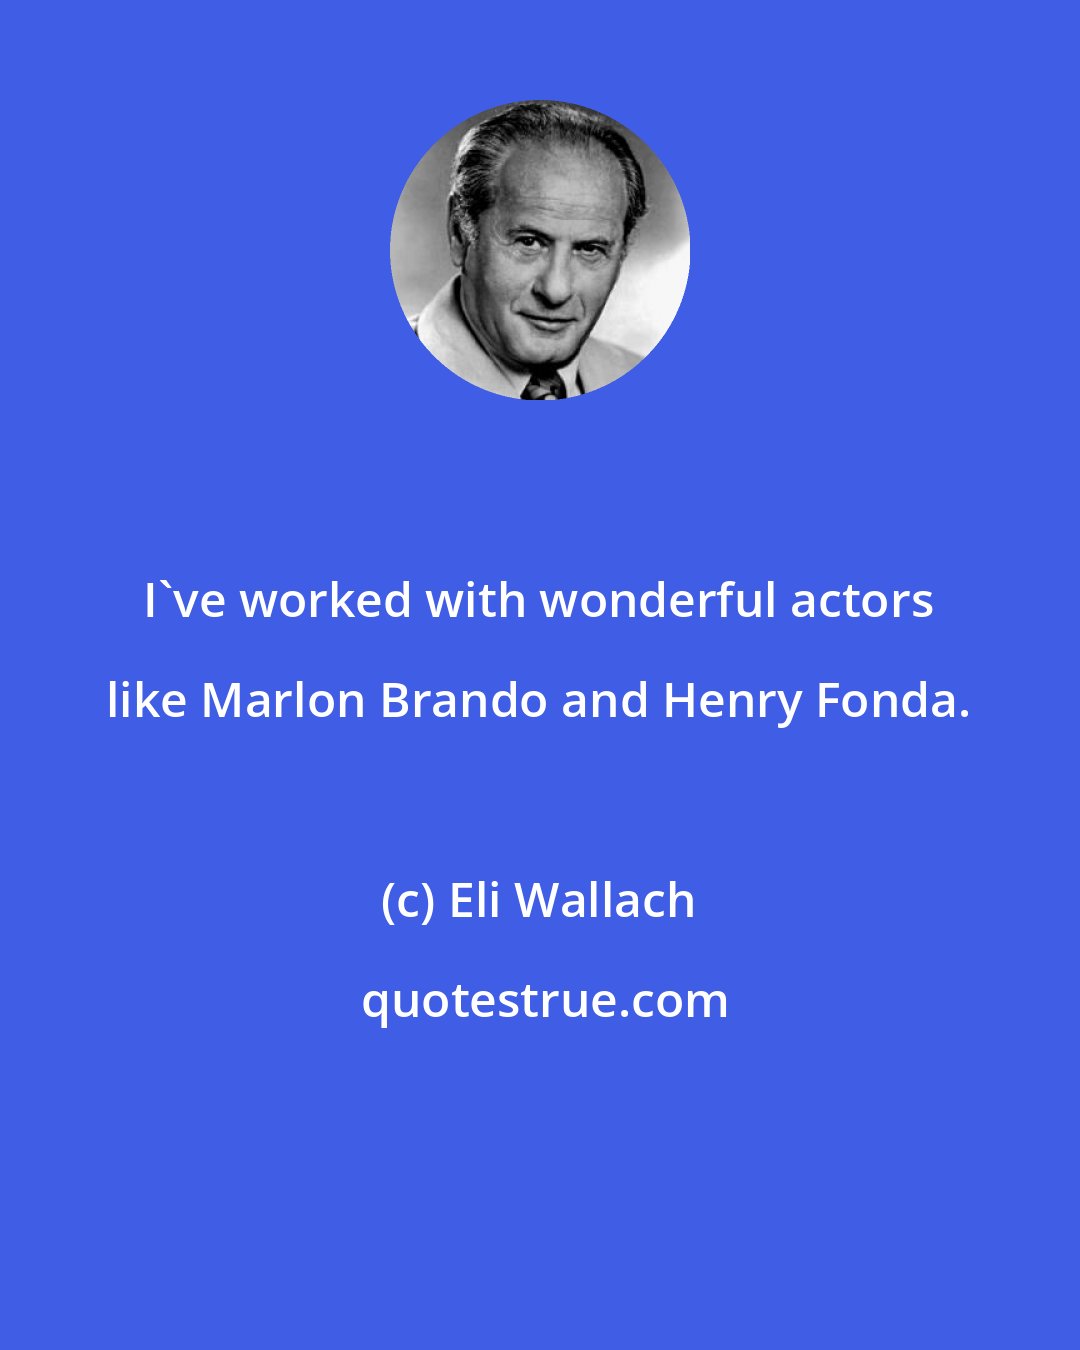 Eli Wallach: I've worked with wonderful actors like Marlon Brando and Henry Fonda.